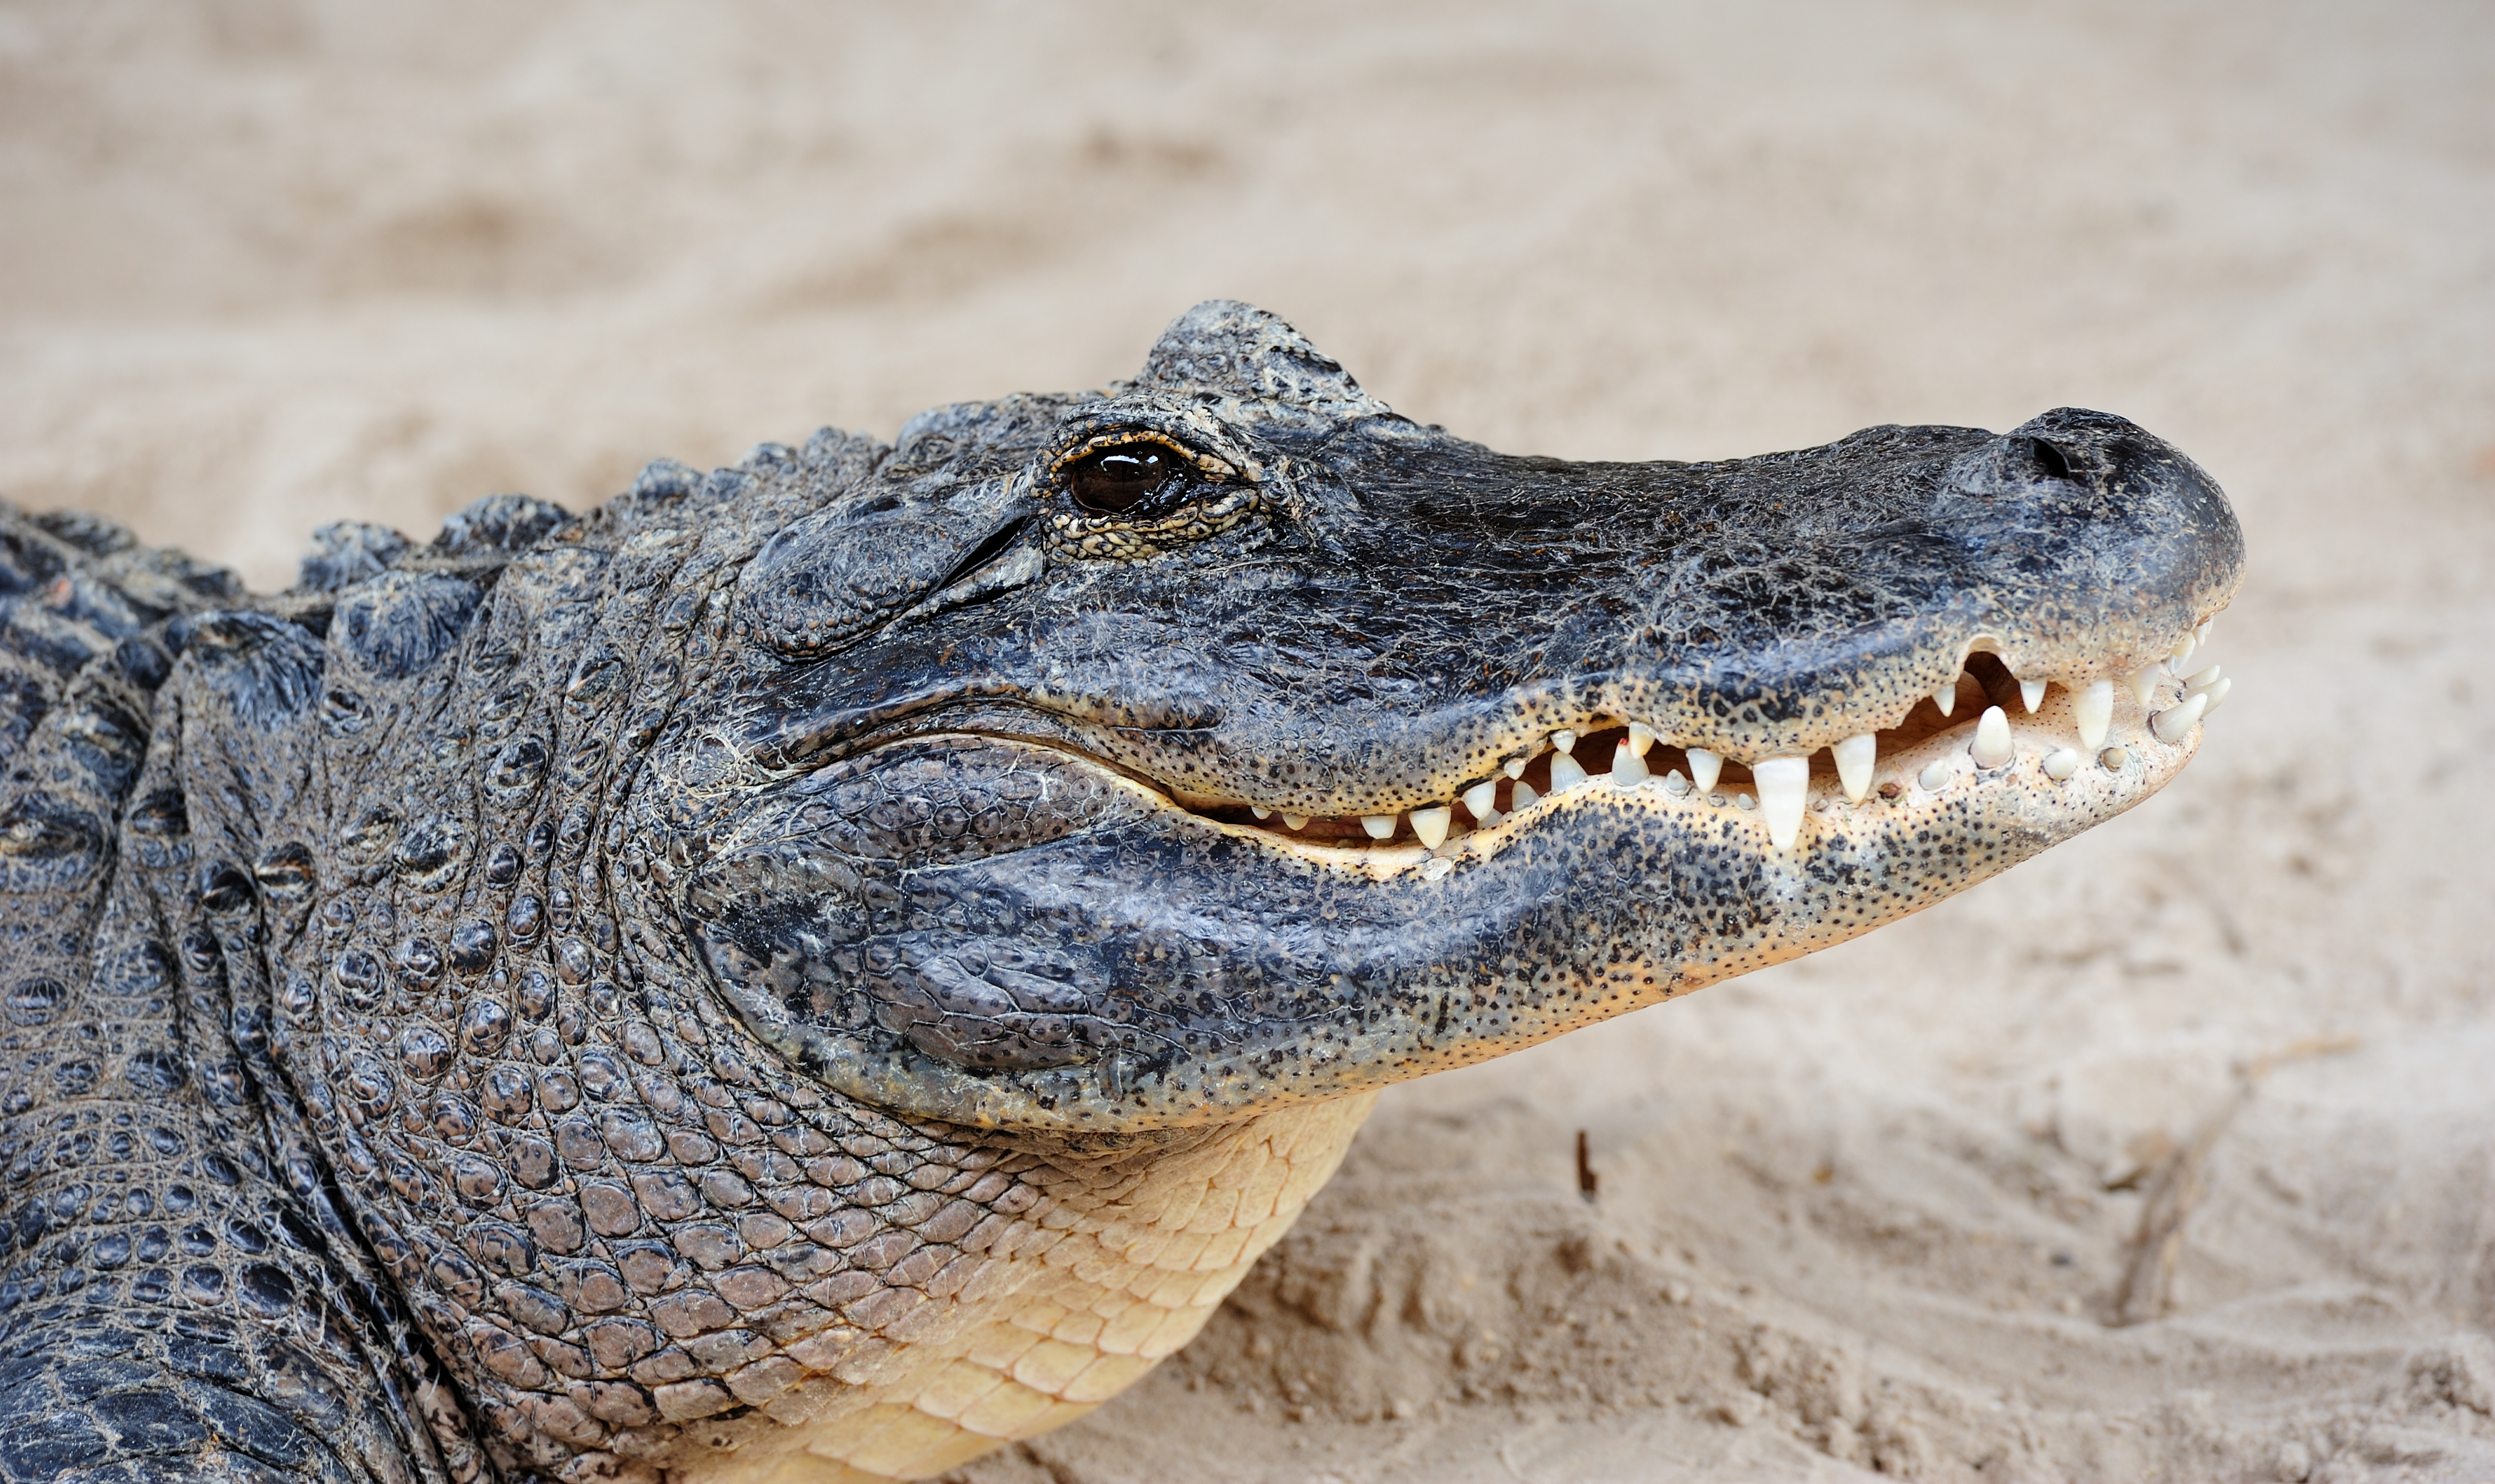 alligator-closeup-on-sand.jpg